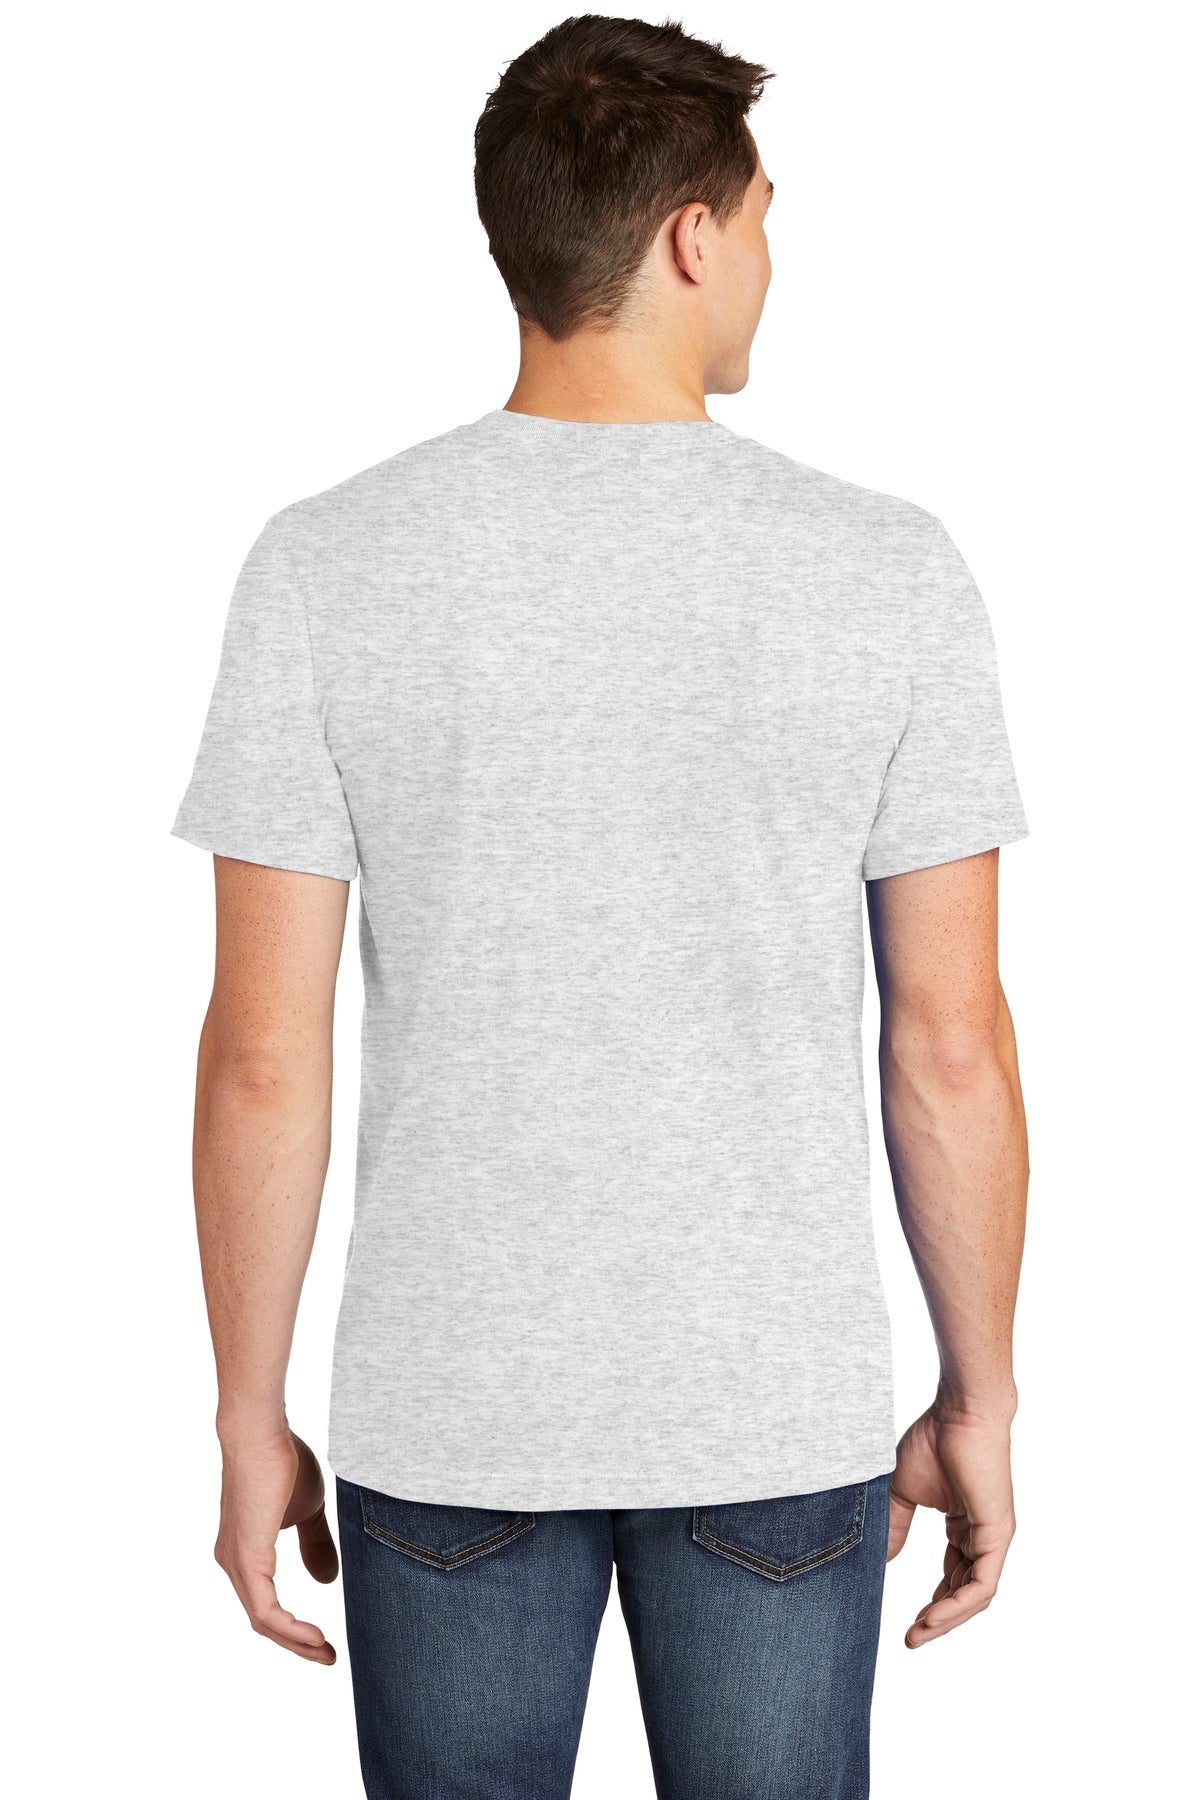 American Apparel ® Fine Jersey T-Shirt. 2001W - DFW Impression